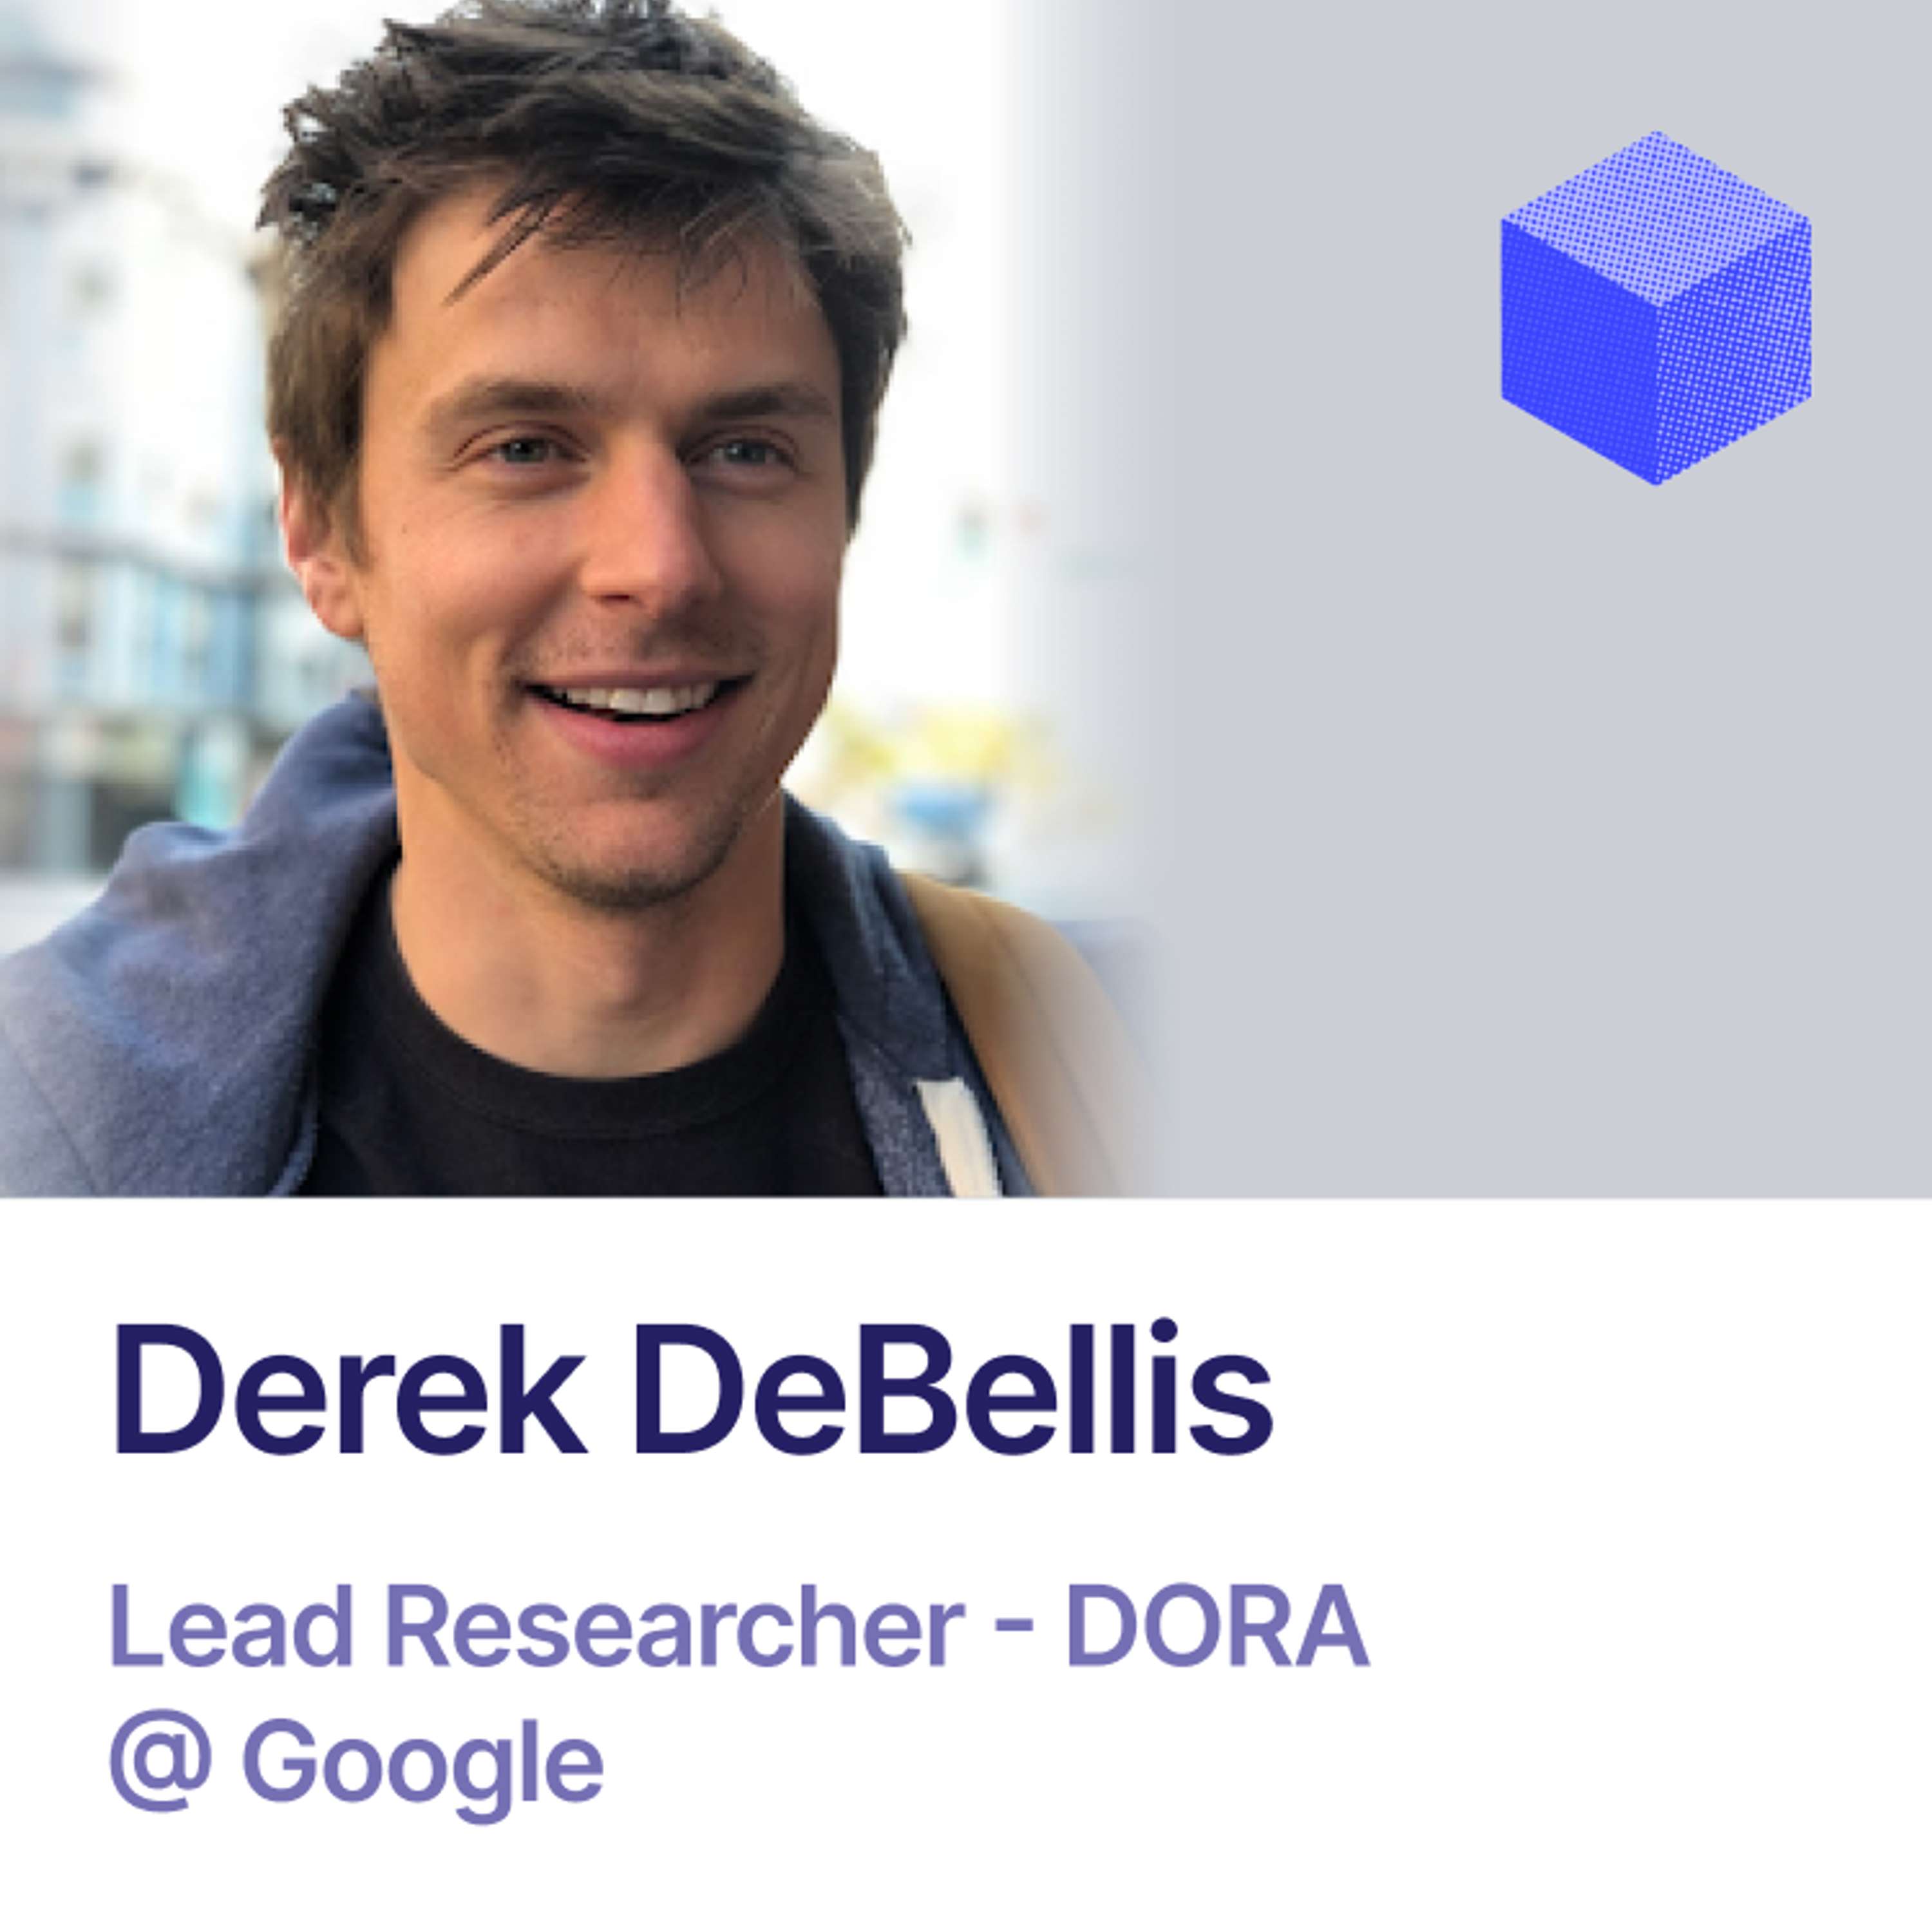 The science behind DORA | Derek DeBellis (Google)